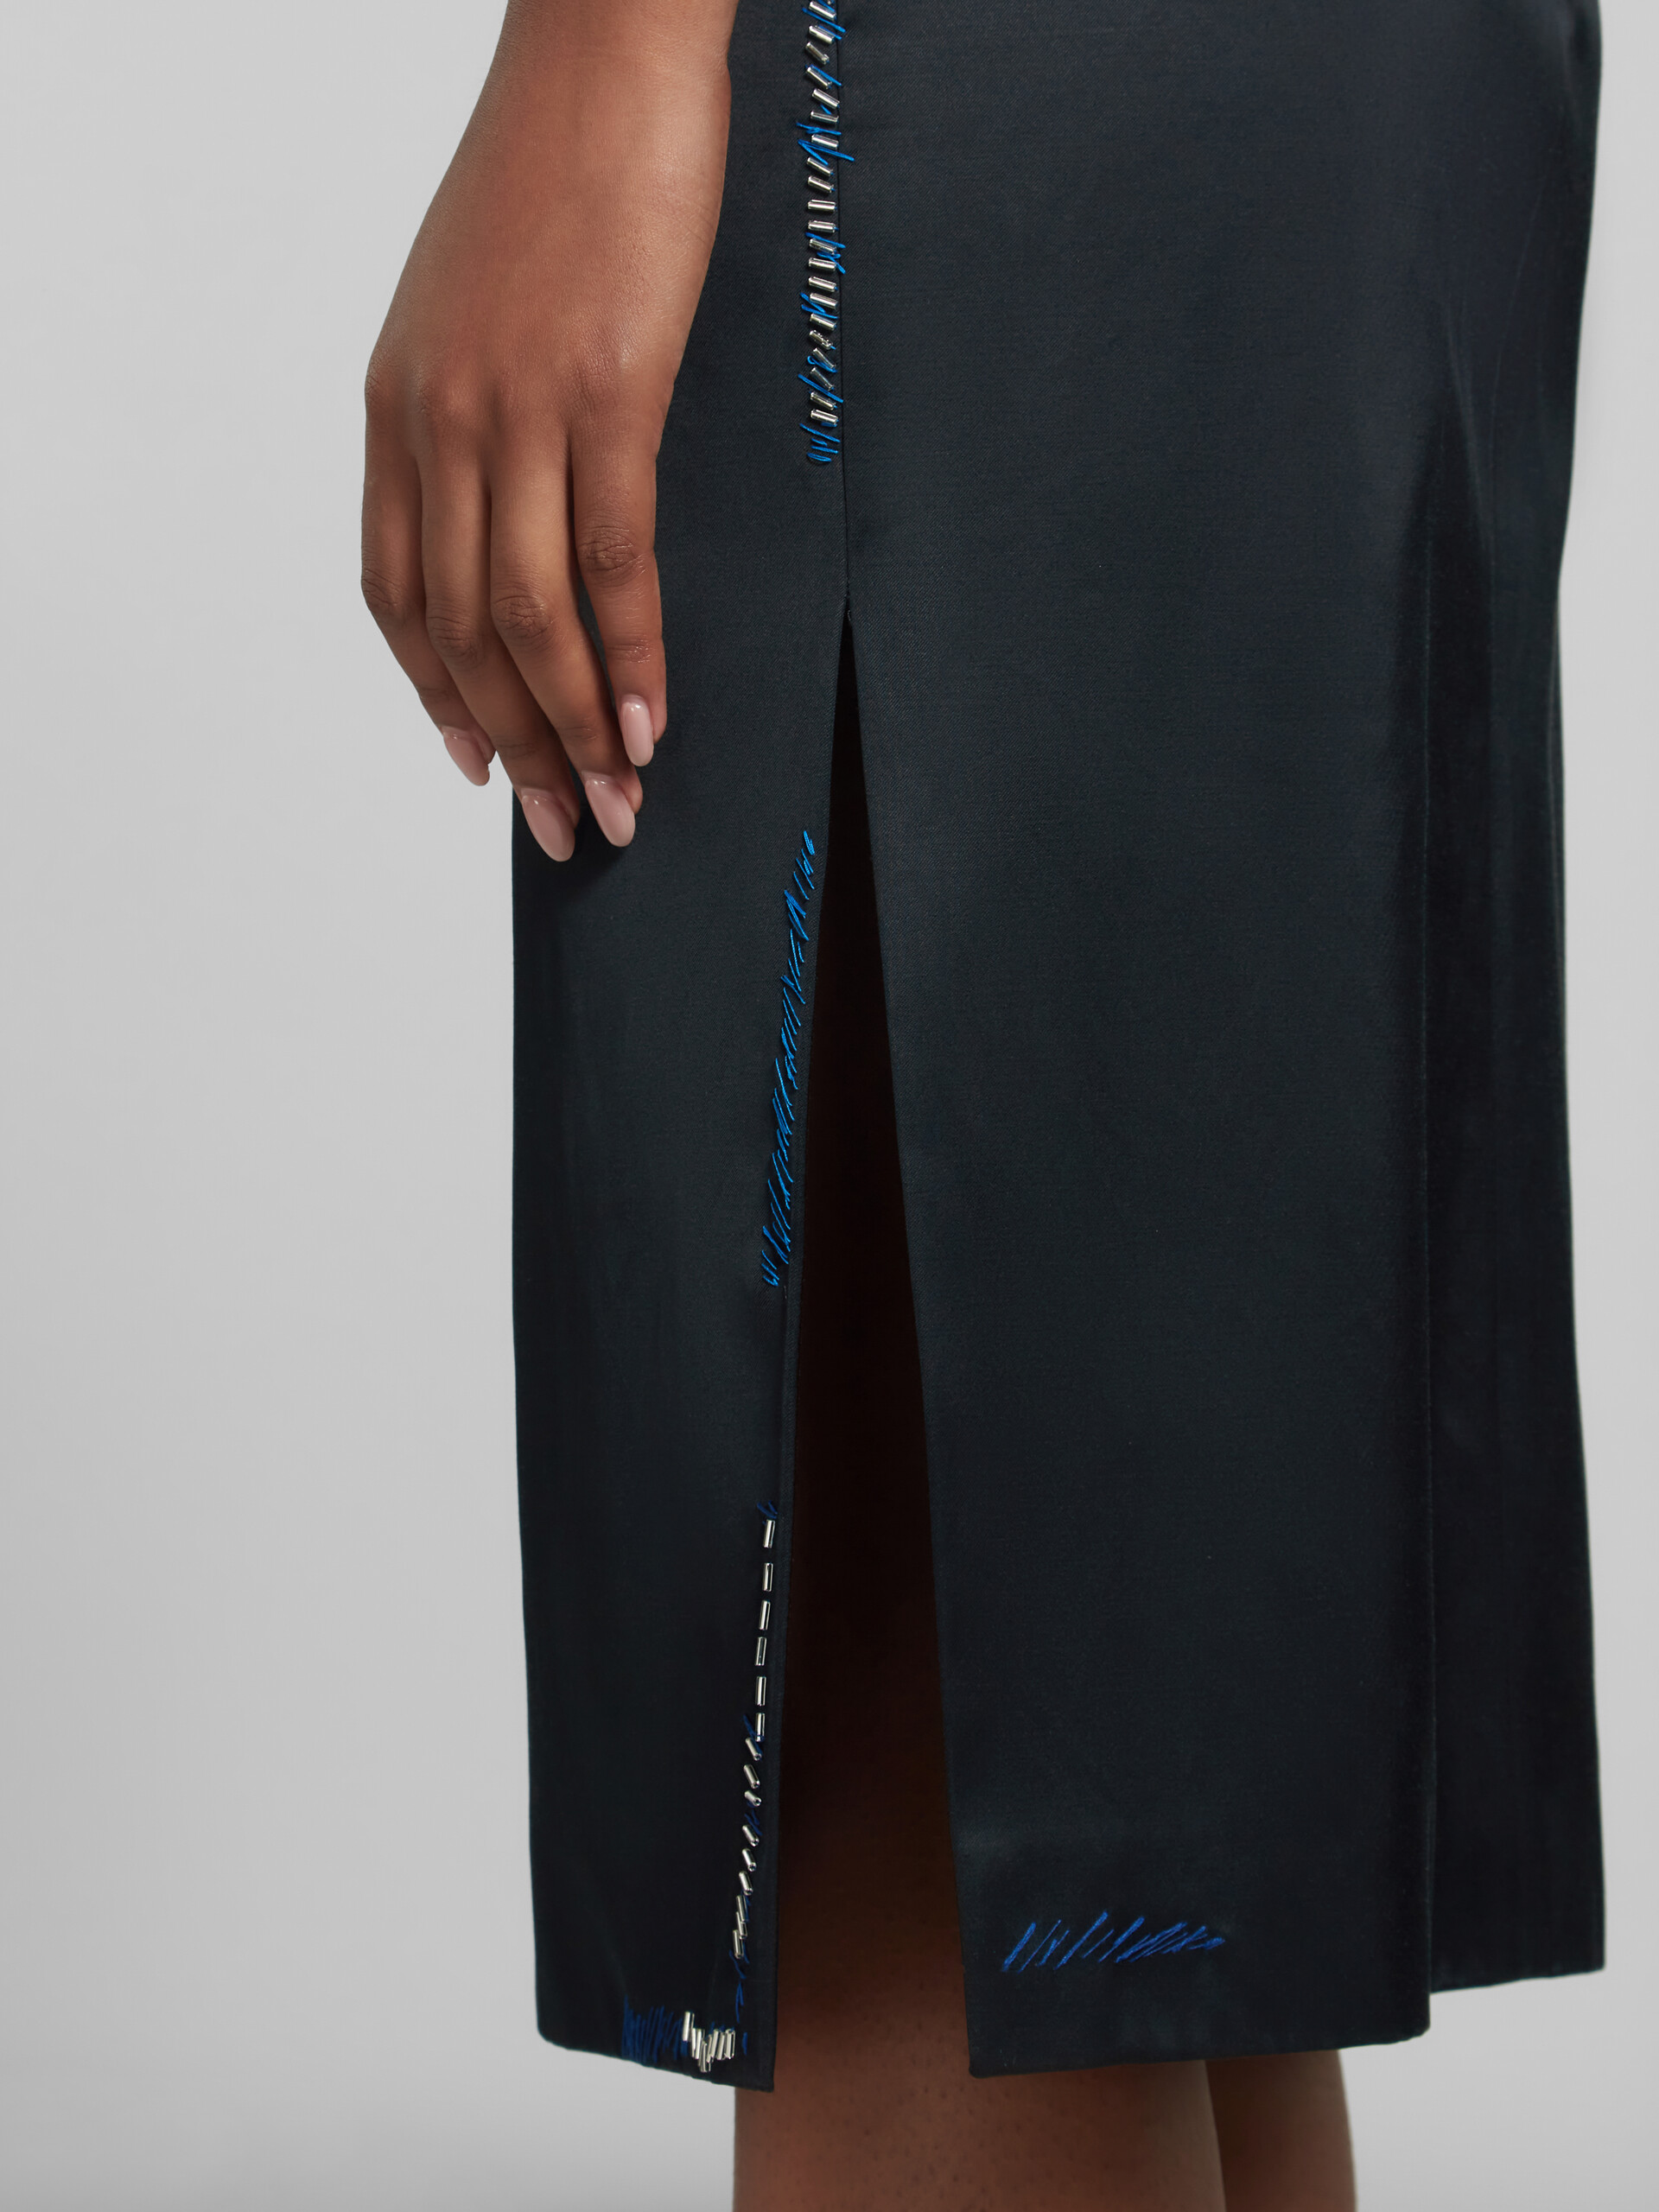 Robe fourreau en satin duchesse noir avec effet raccommodé en perles - Robes - Image 5